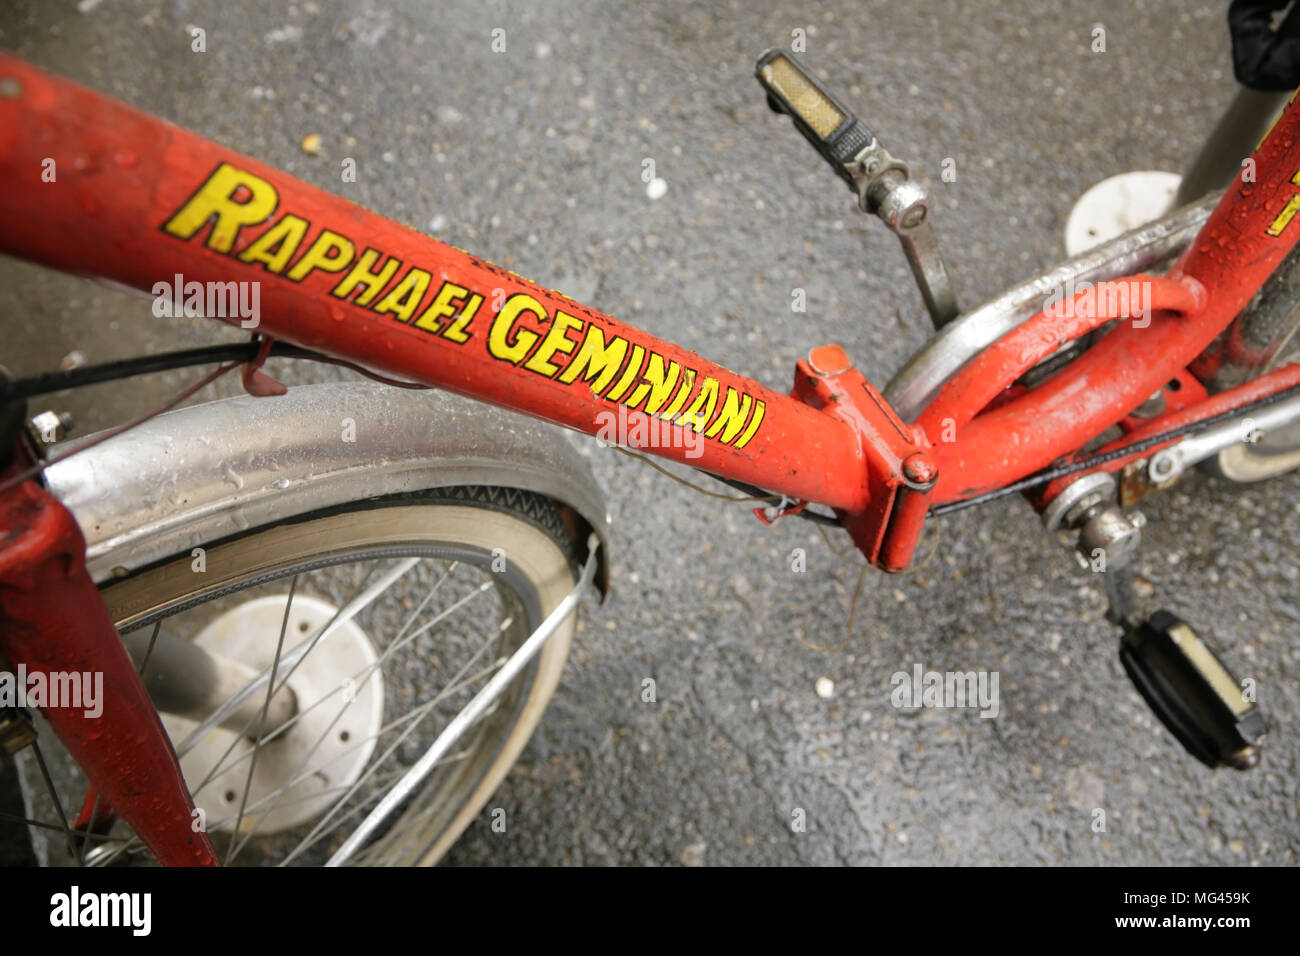 Vintage red Raphael Geminiani branded folding bicycle, Italy. Stock Photo